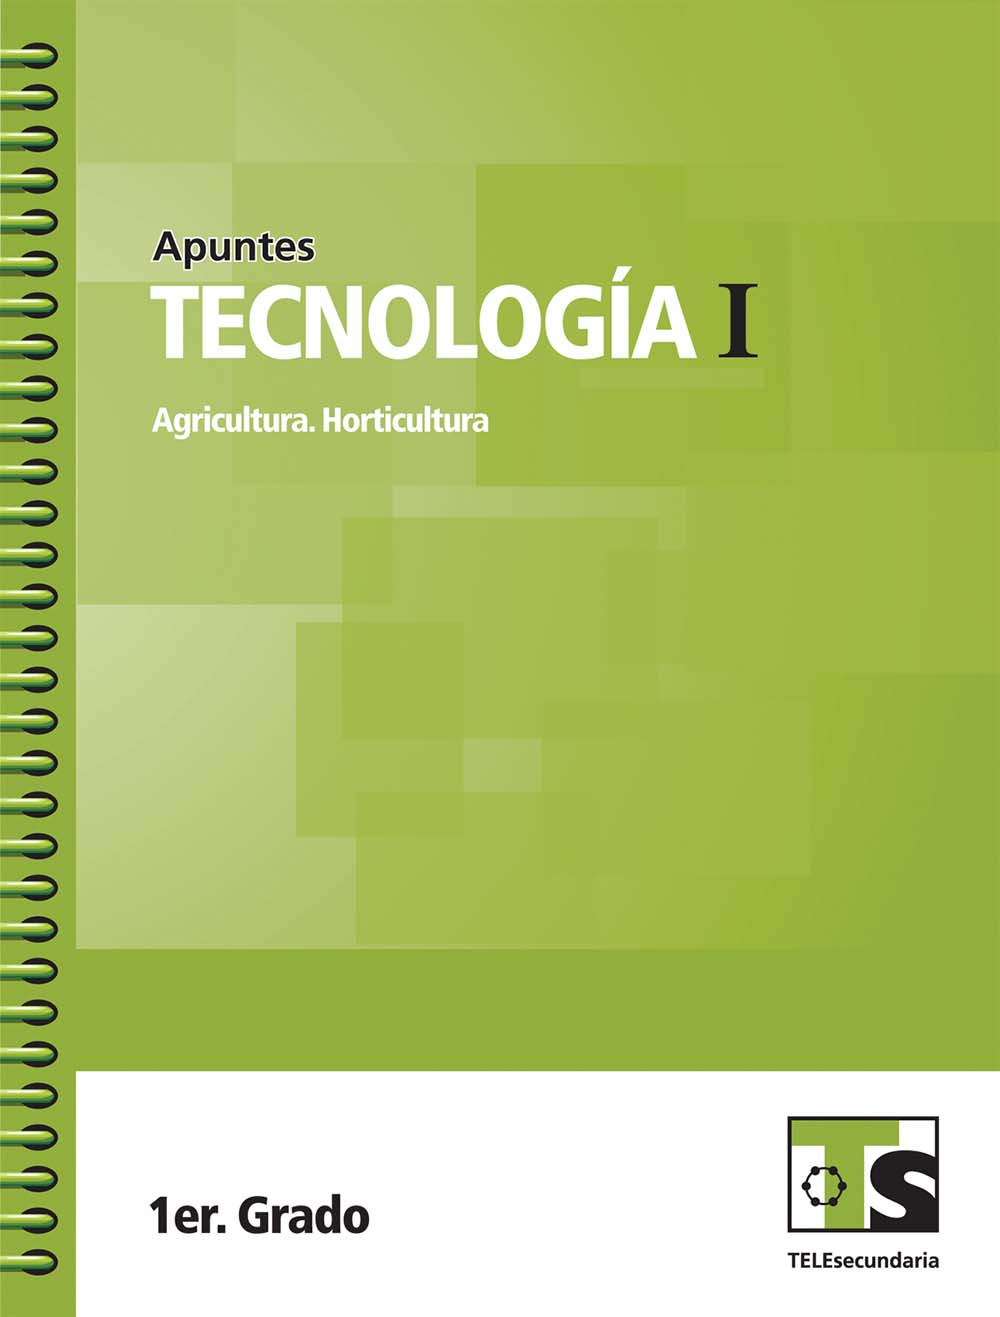 Tecnología I. Agricultura. Horticultura. Apuntes, Editorial: Secretaría de Educación Pública, Nivel: Telesecundaria, Grado: 1